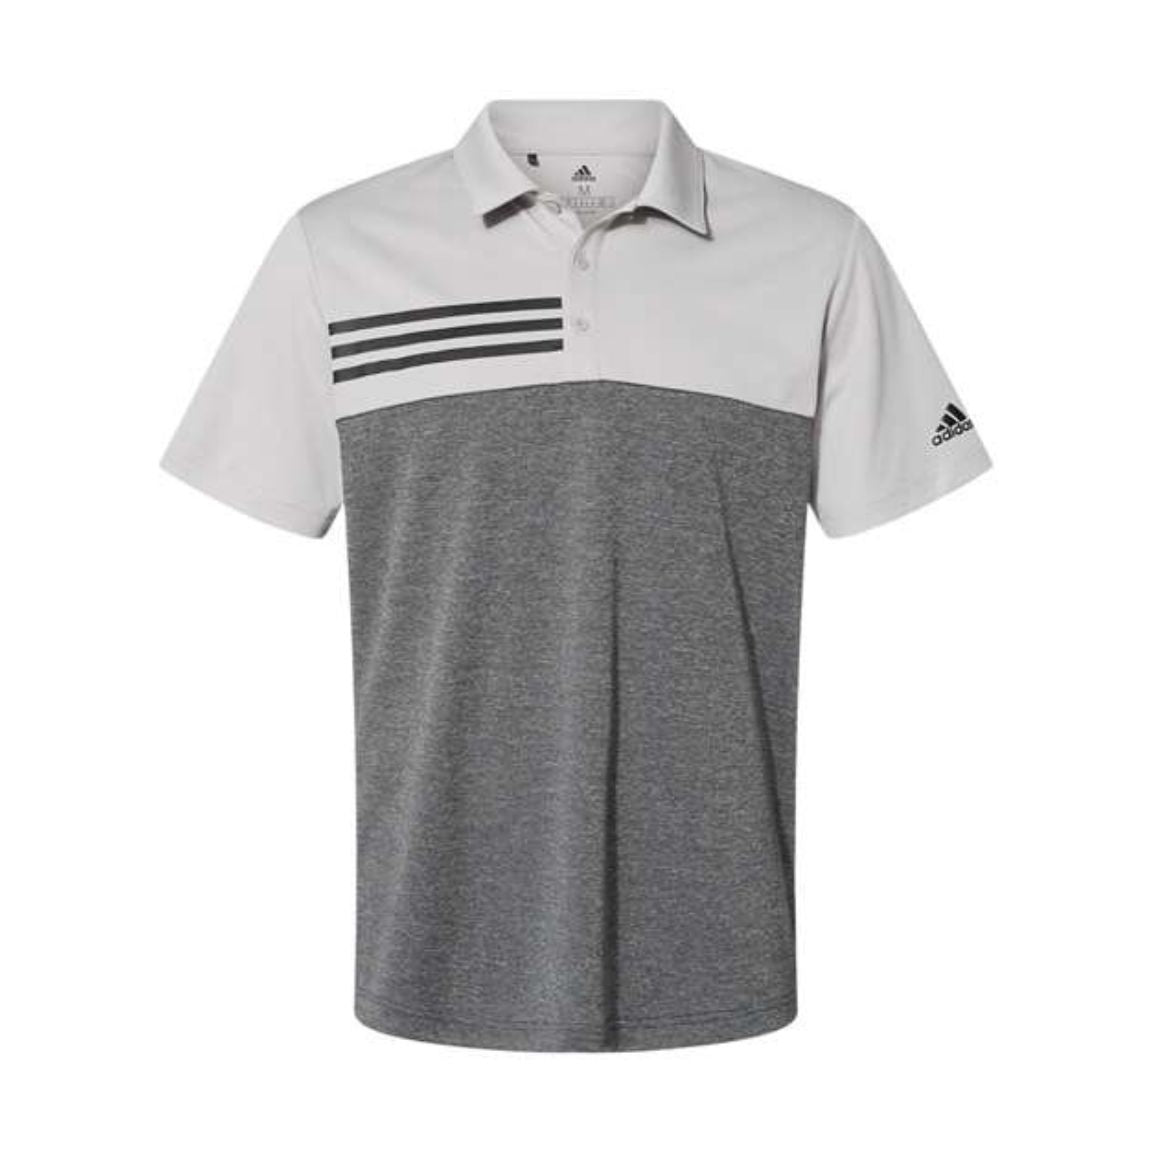 Adidas - Heathered Colorblocked 3-Stripes Polo